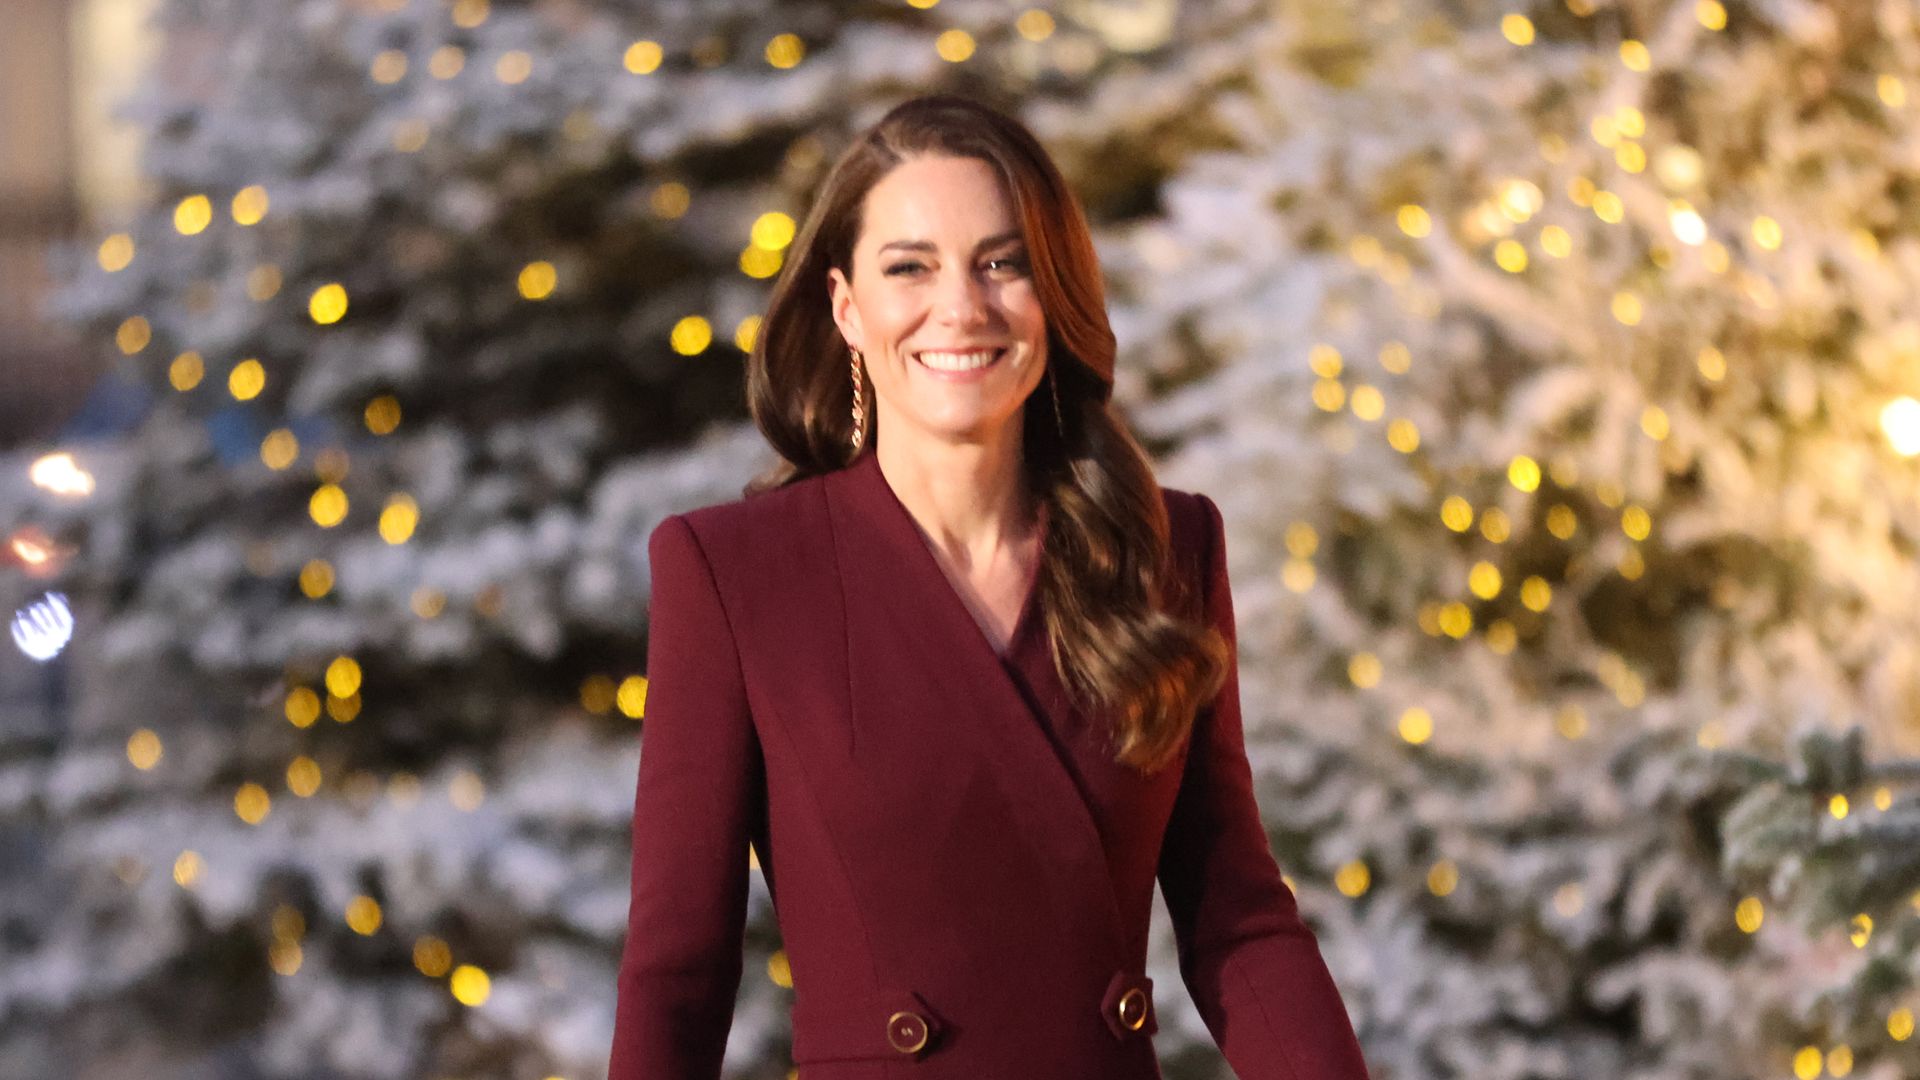 Kate Middleton arrives for Christmas Carol Service